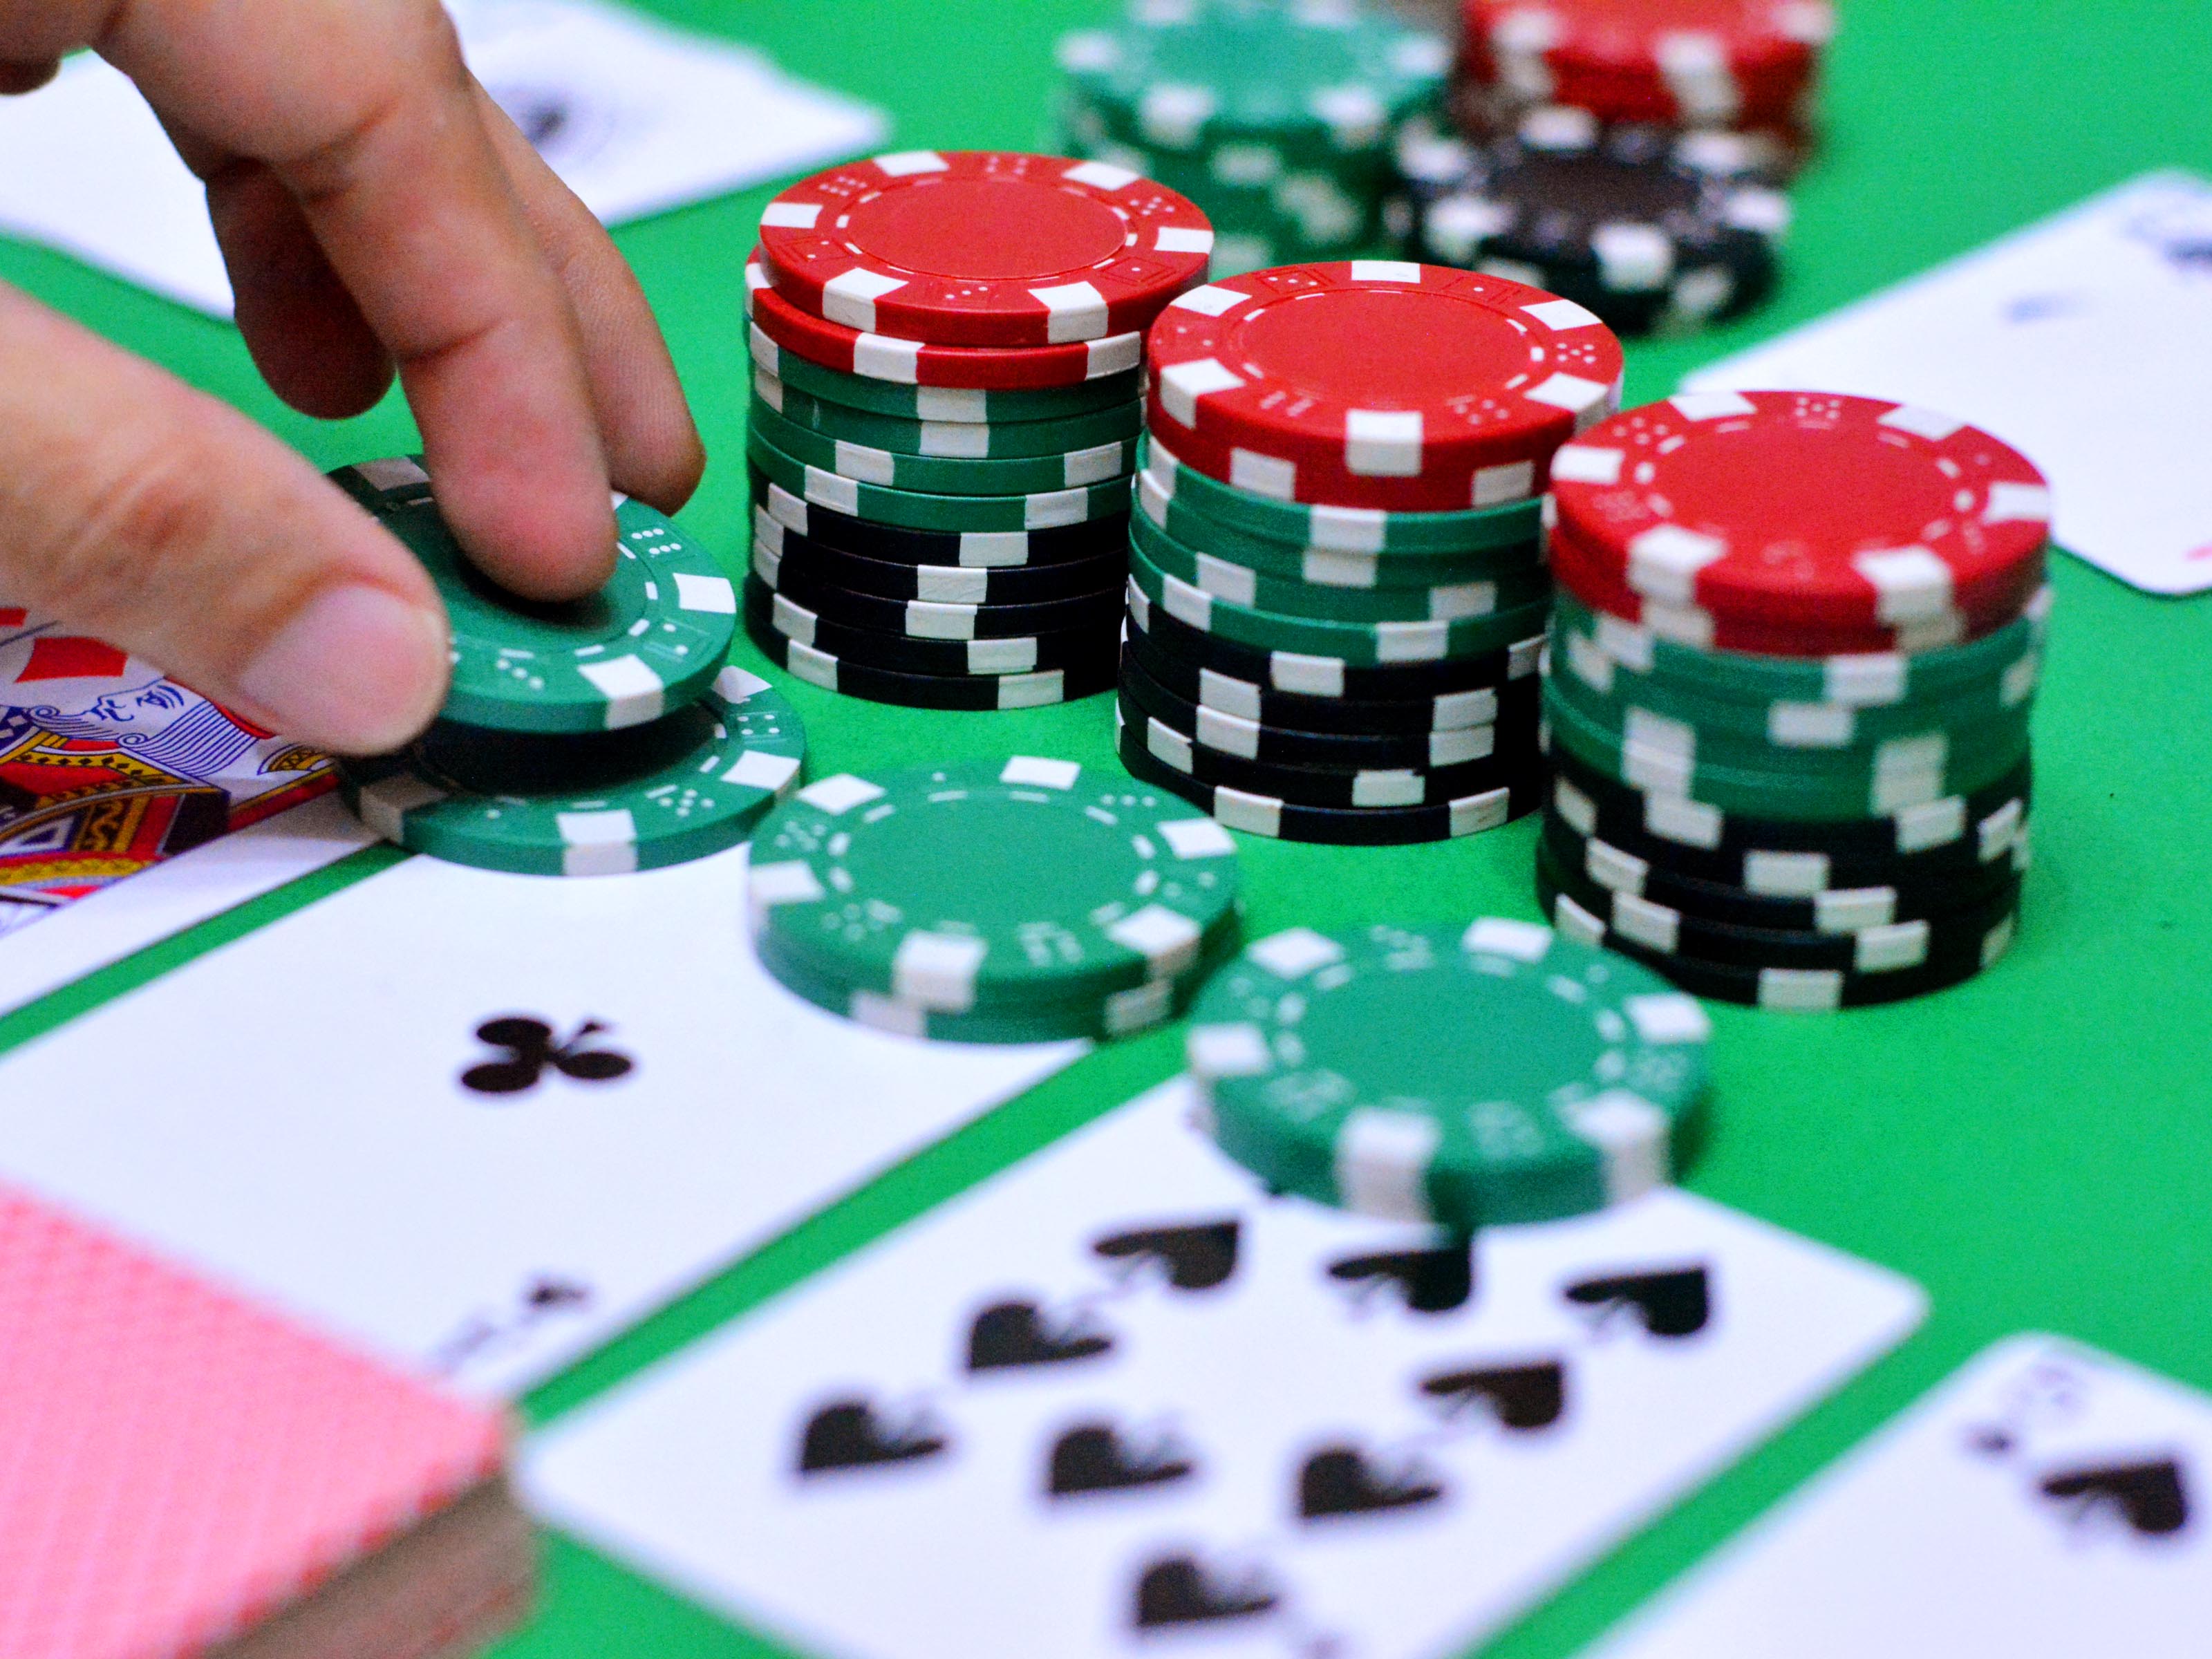 Some Dishonest Tactics of Rogue Online Casinos